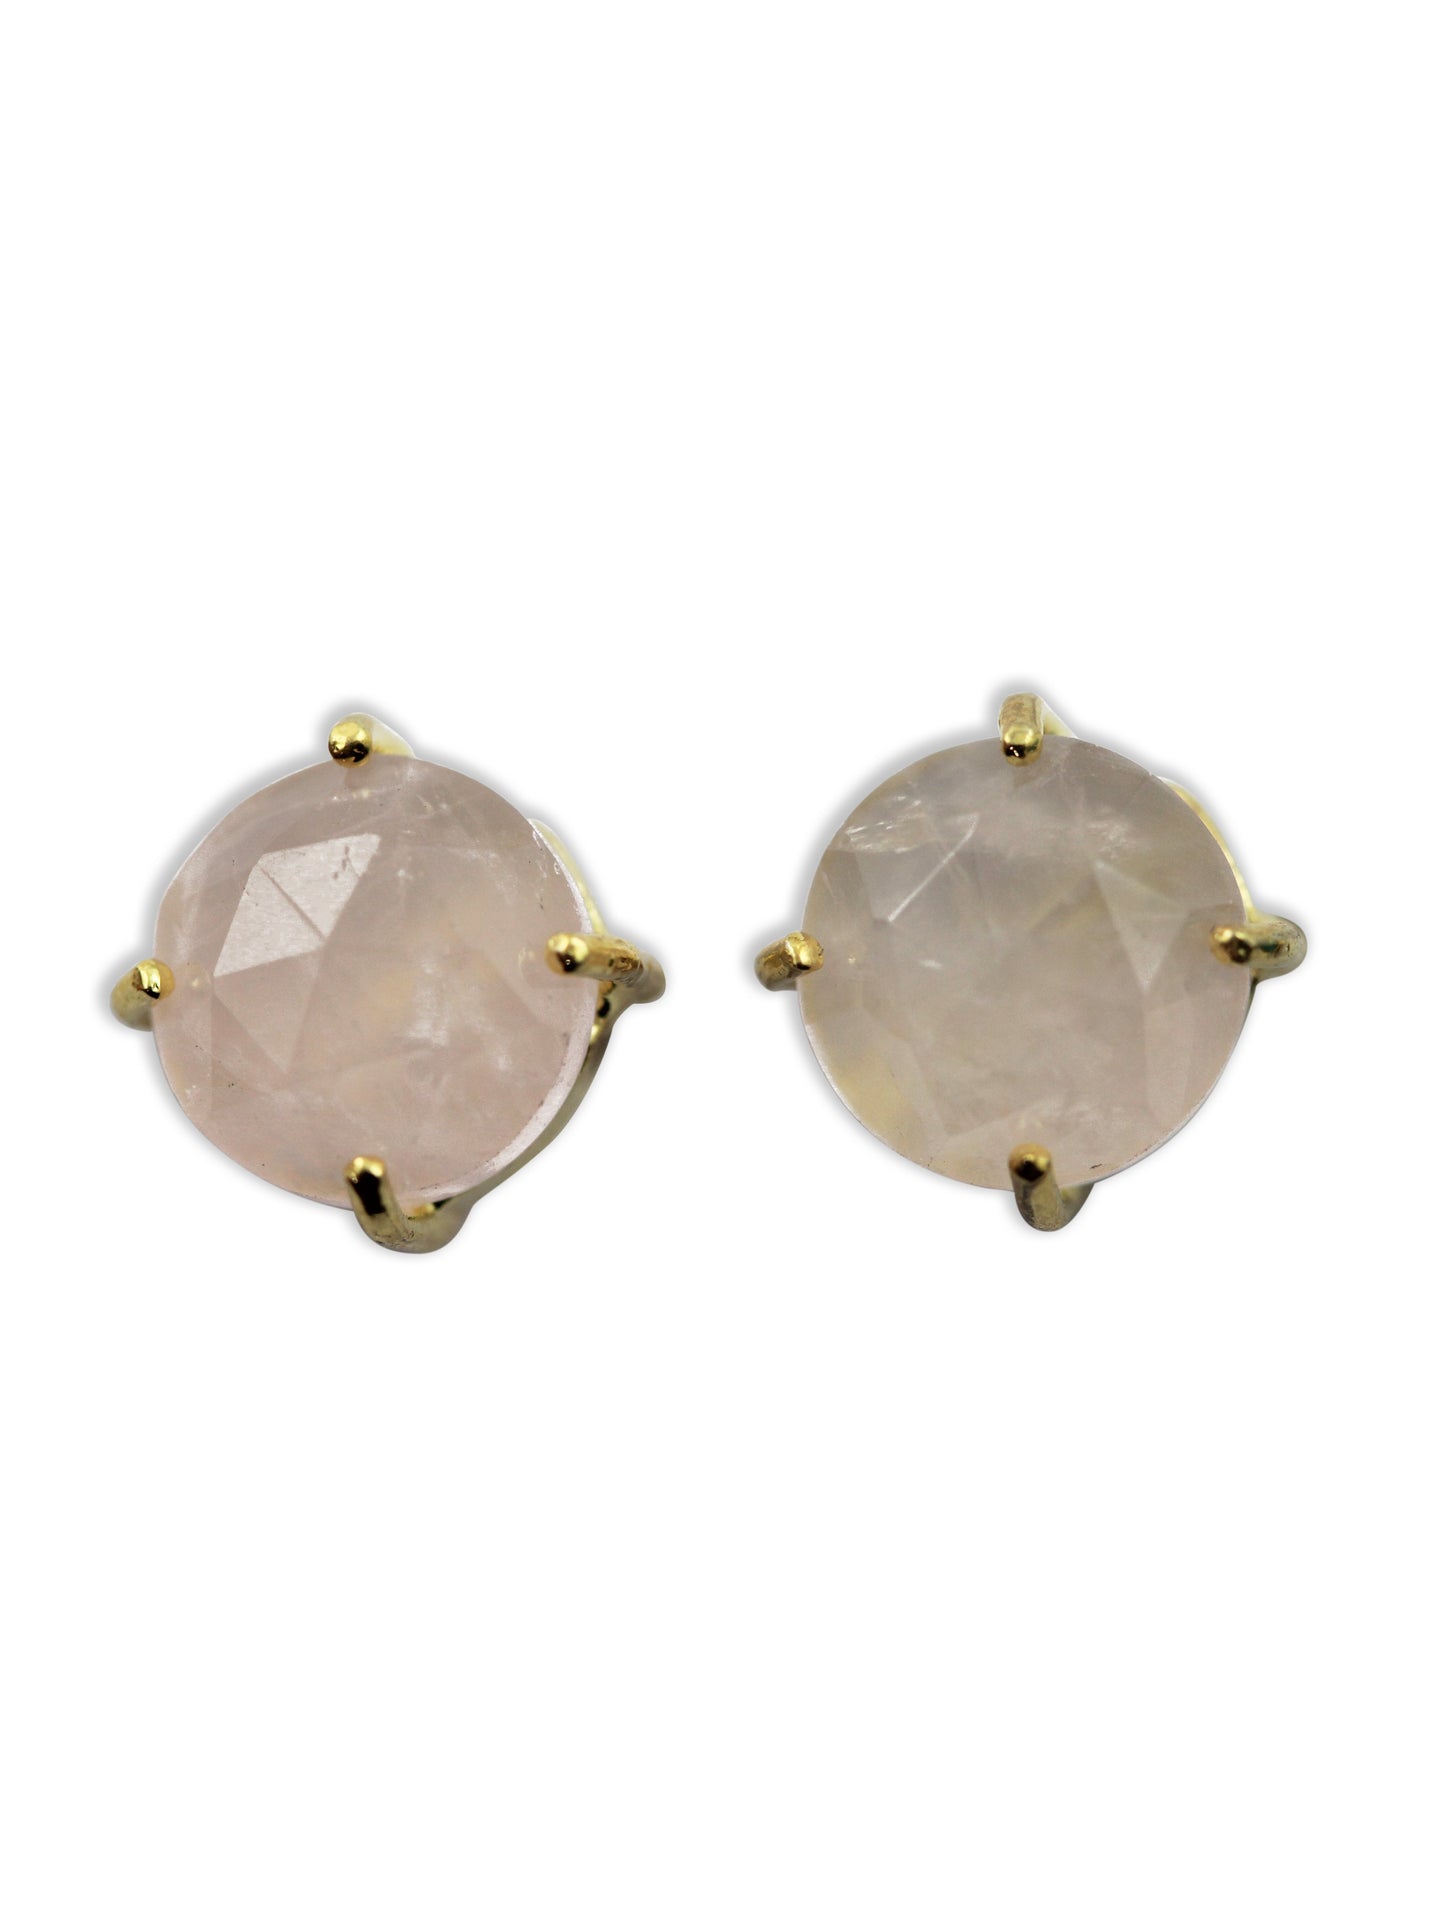 rose quartz earrings, studs,rose quartz stud earrings,rose quartz earrings stud,stud earrings,rose quartz studs,stud earrings for women - Meena Design